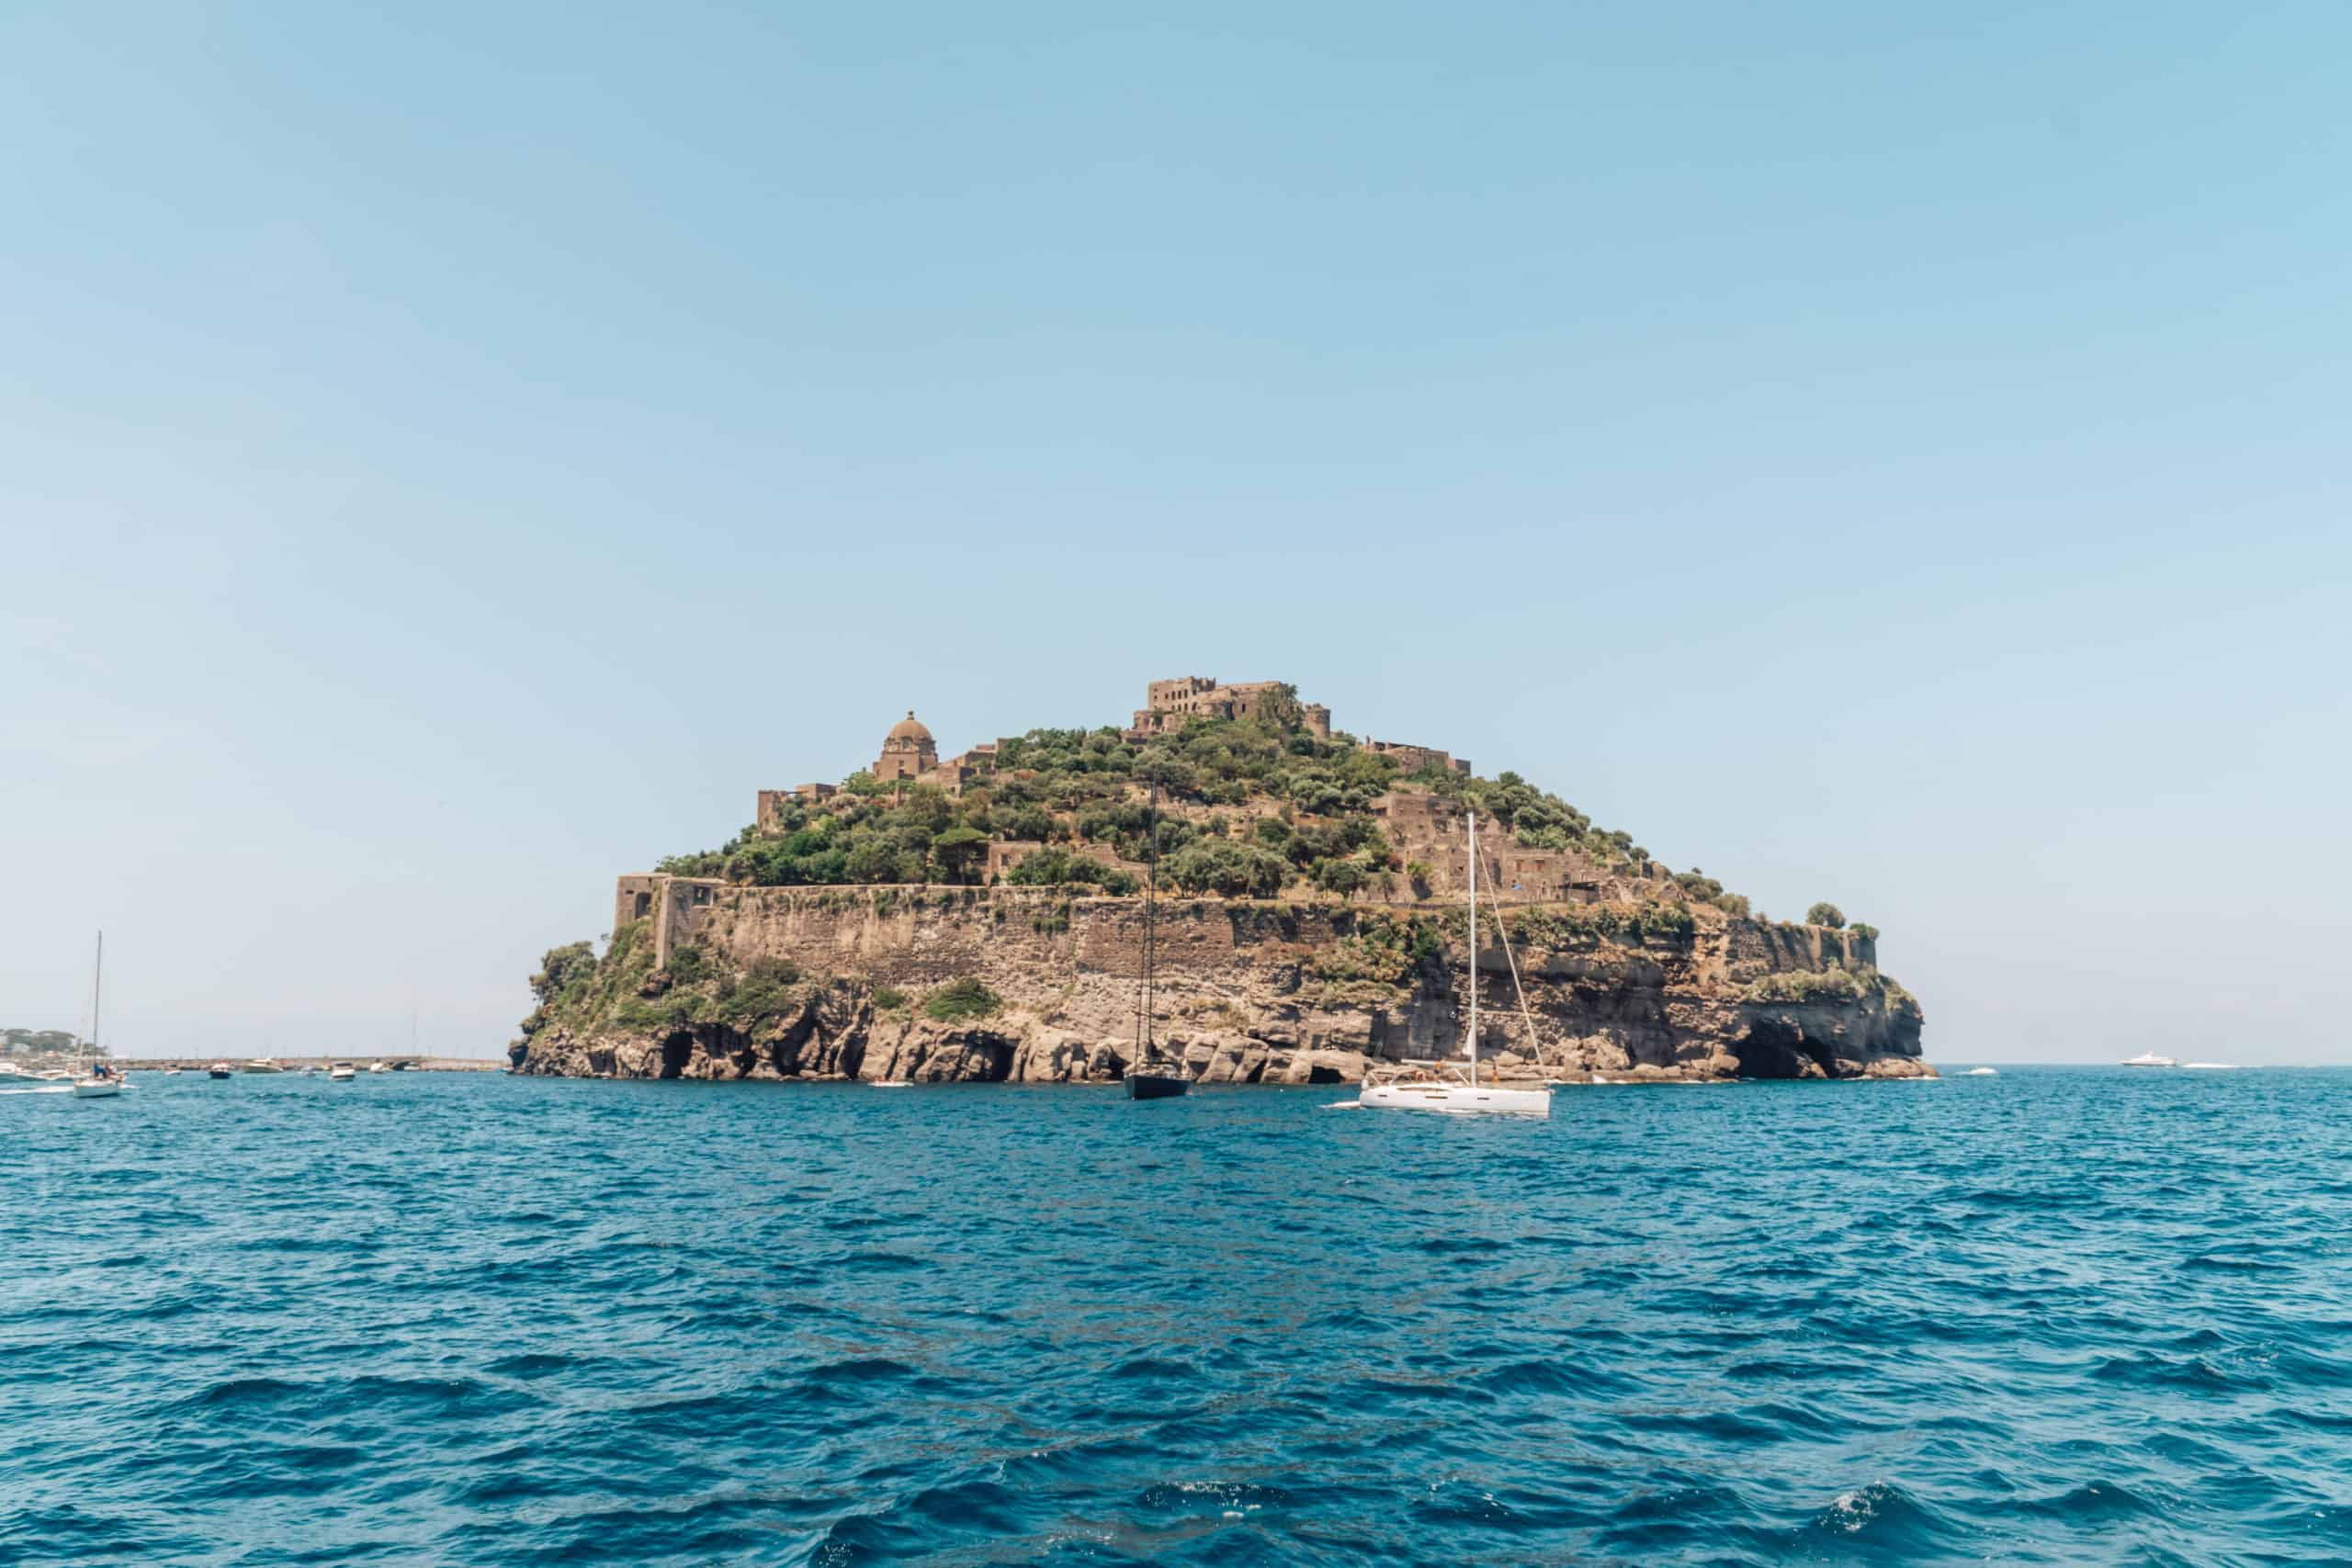 View of Castello Aragonese from Giardino Eden beach club on Ischia island in Italy